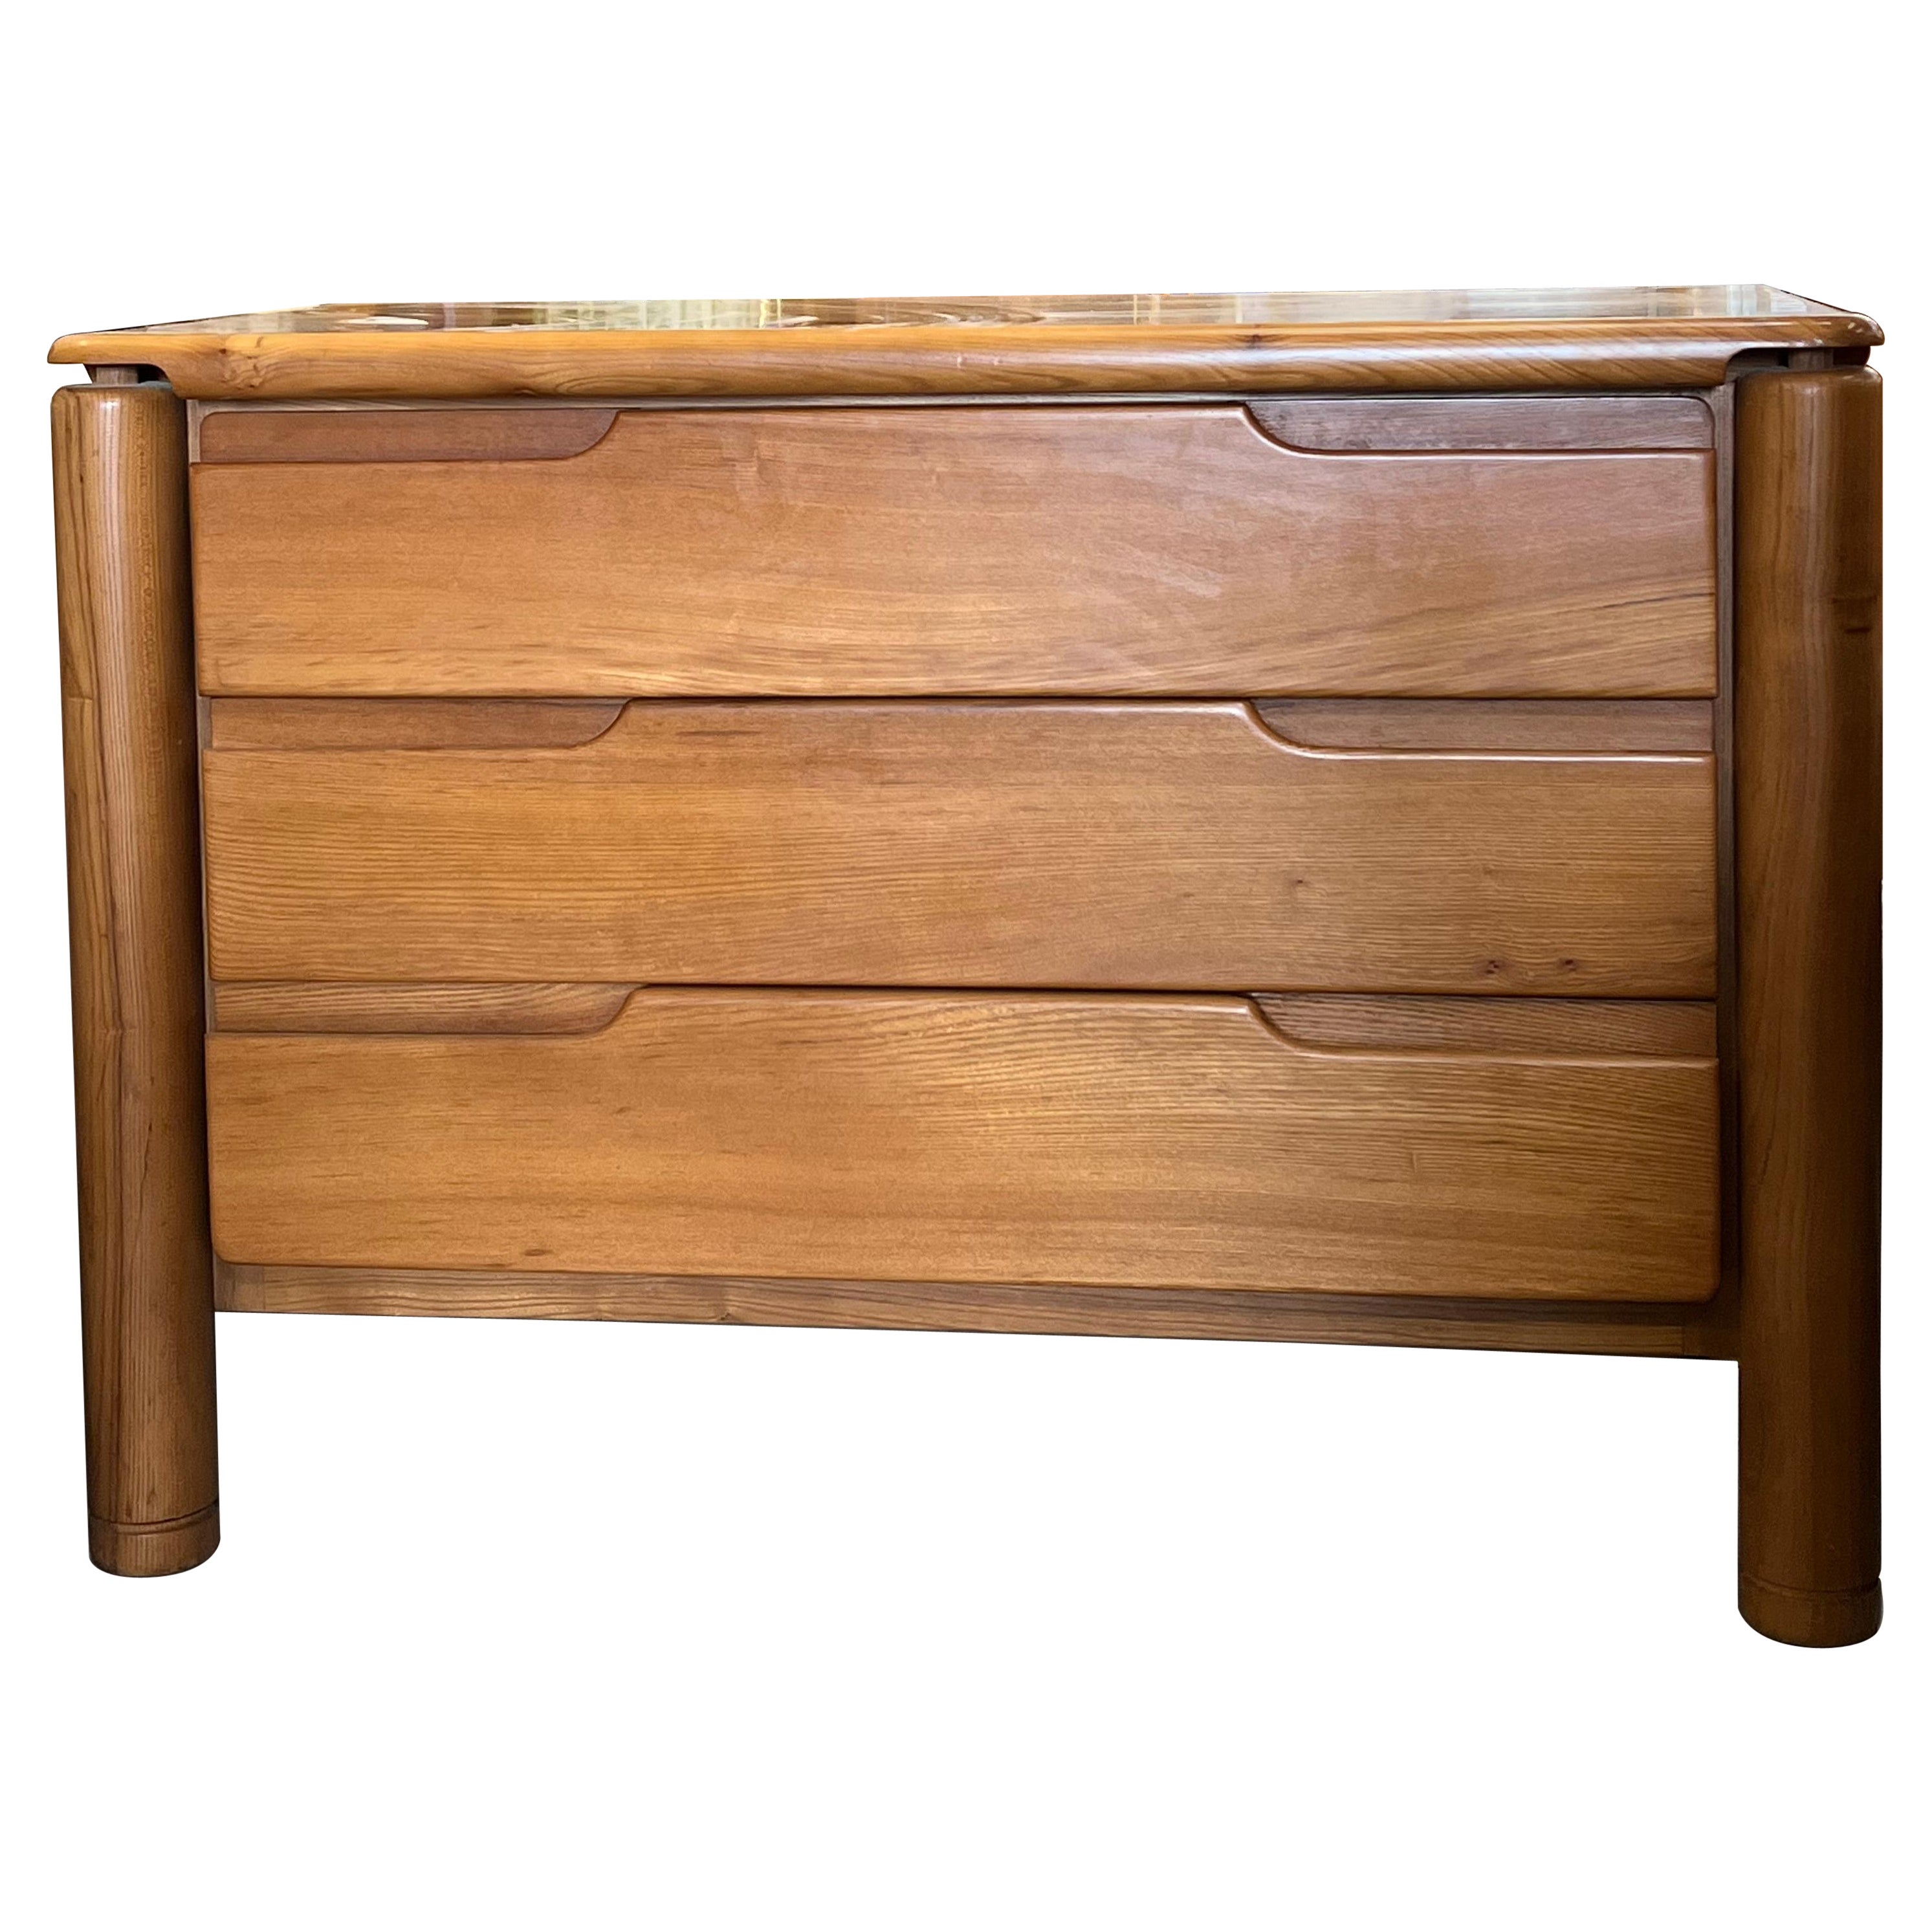 1960’s French Elmwood Dresser by Maison Regain For Sale